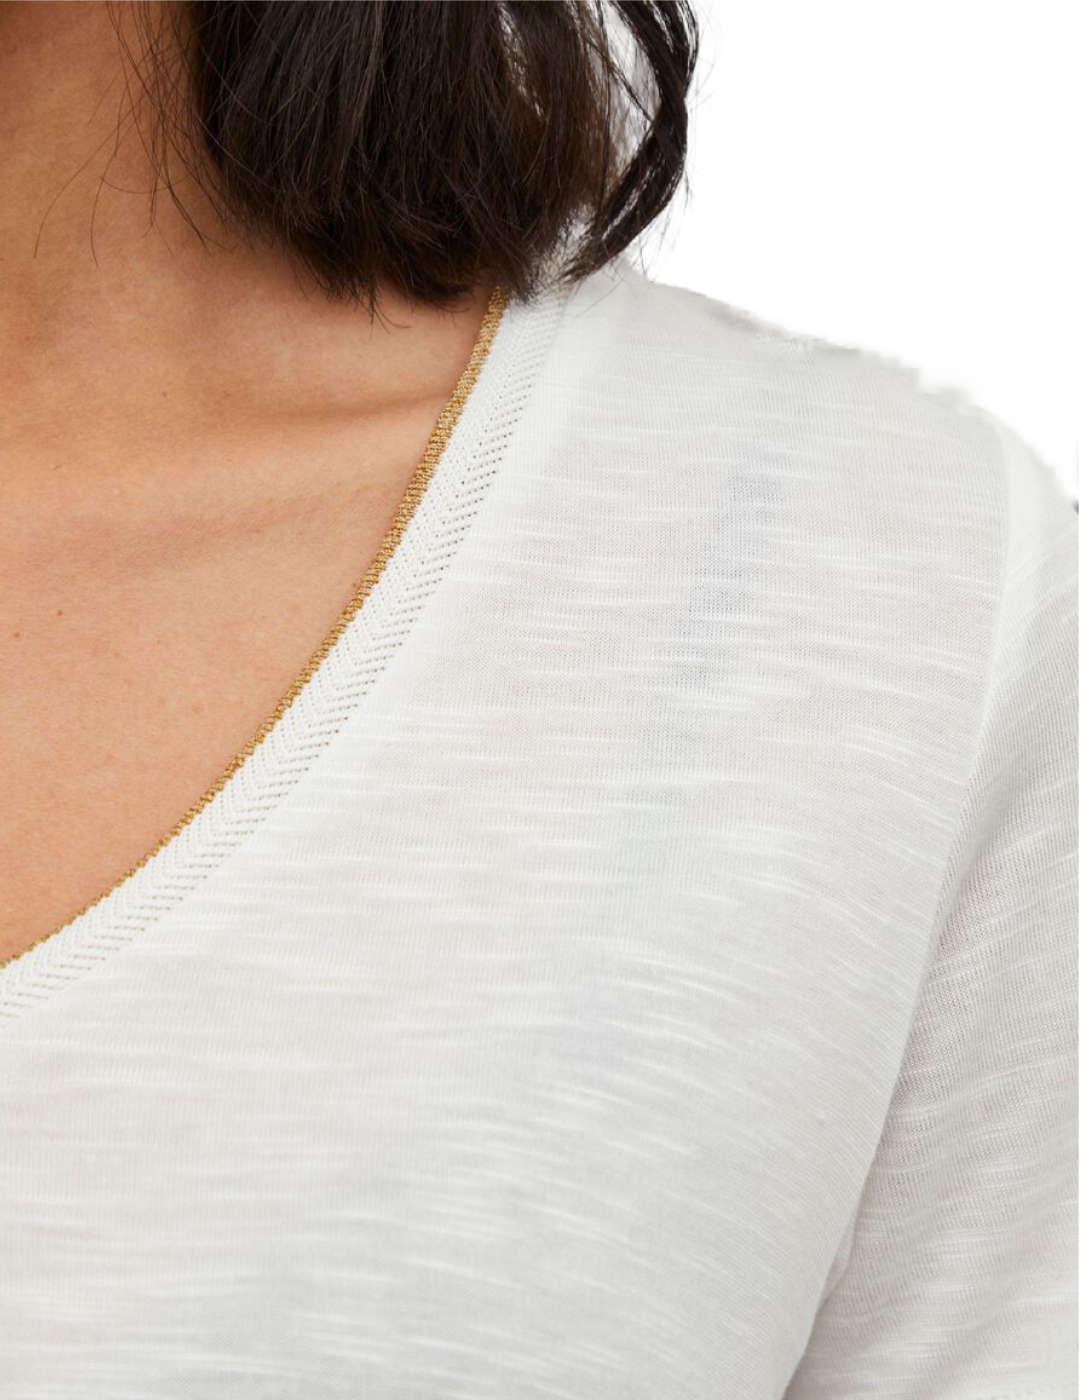 Camiseta Vila Noel manga corta cuello pico blanca para mujer